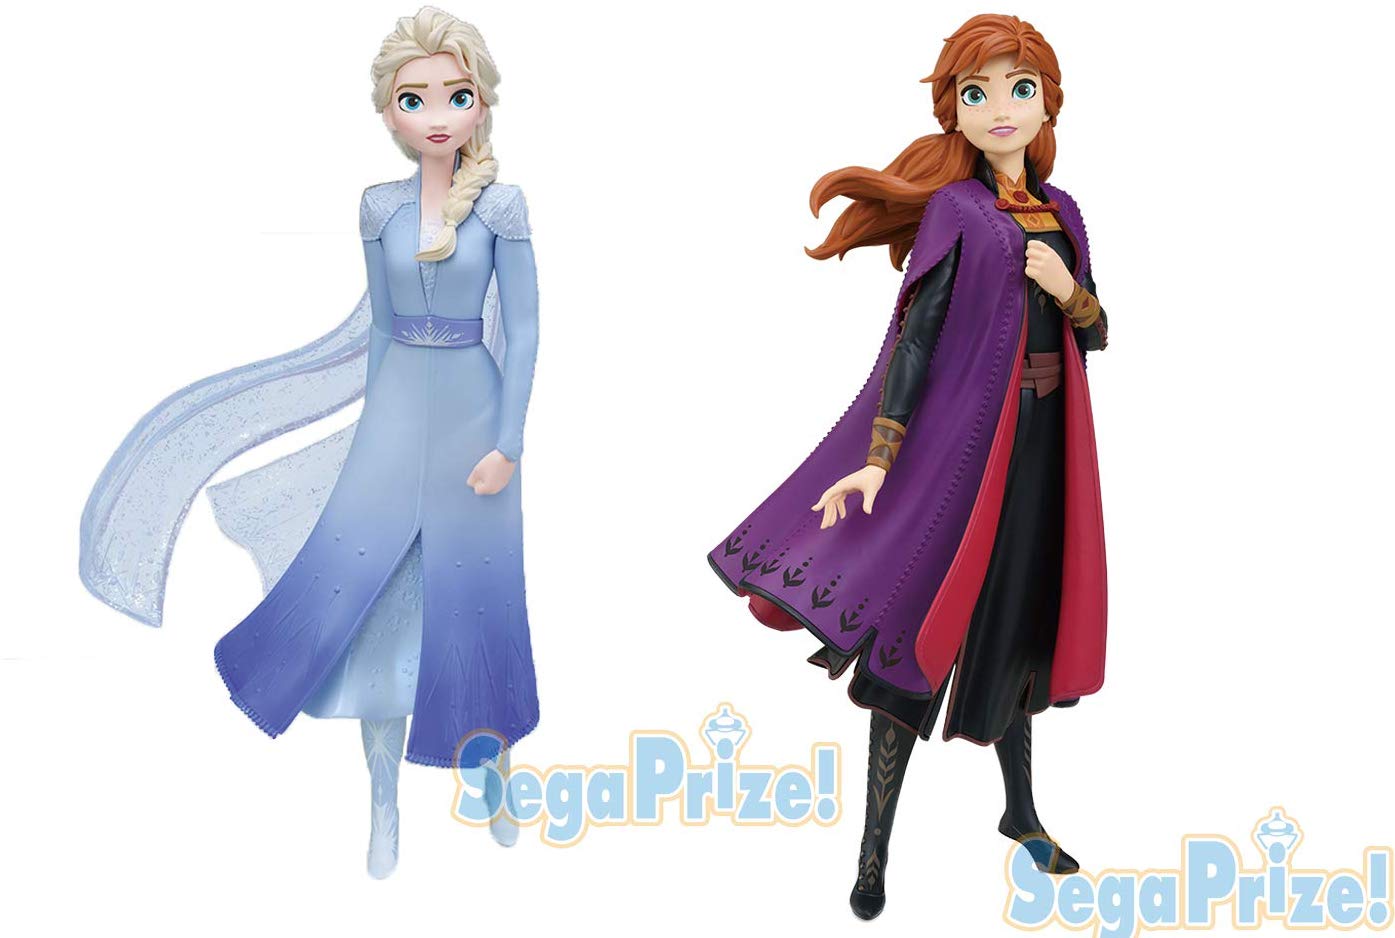 Disney FROZEN Limited Premium Figure Princess Elsa Japan Sega 2019